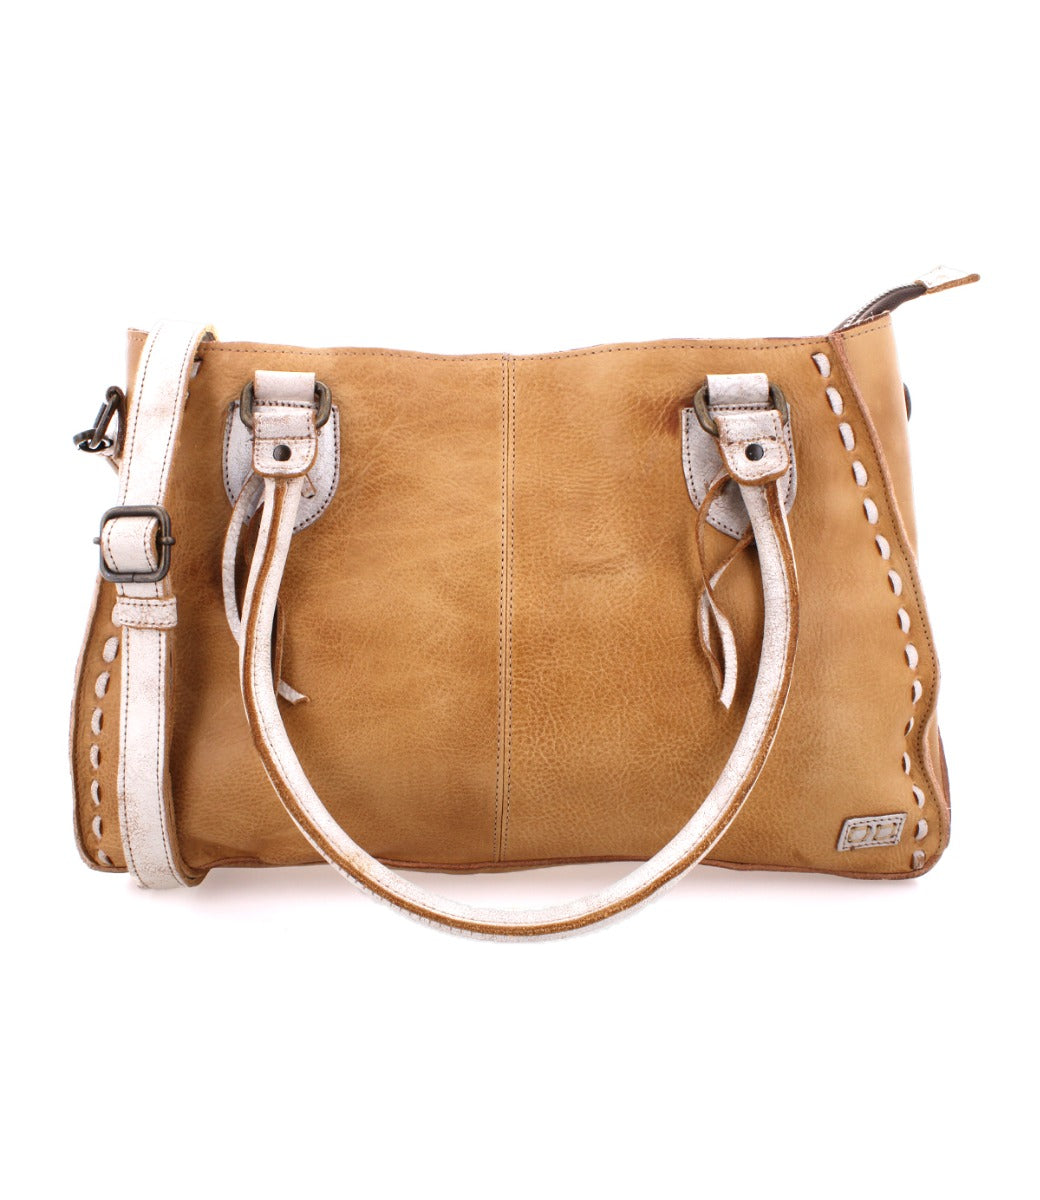 A Rockababy leather handbag by Bed Stu.